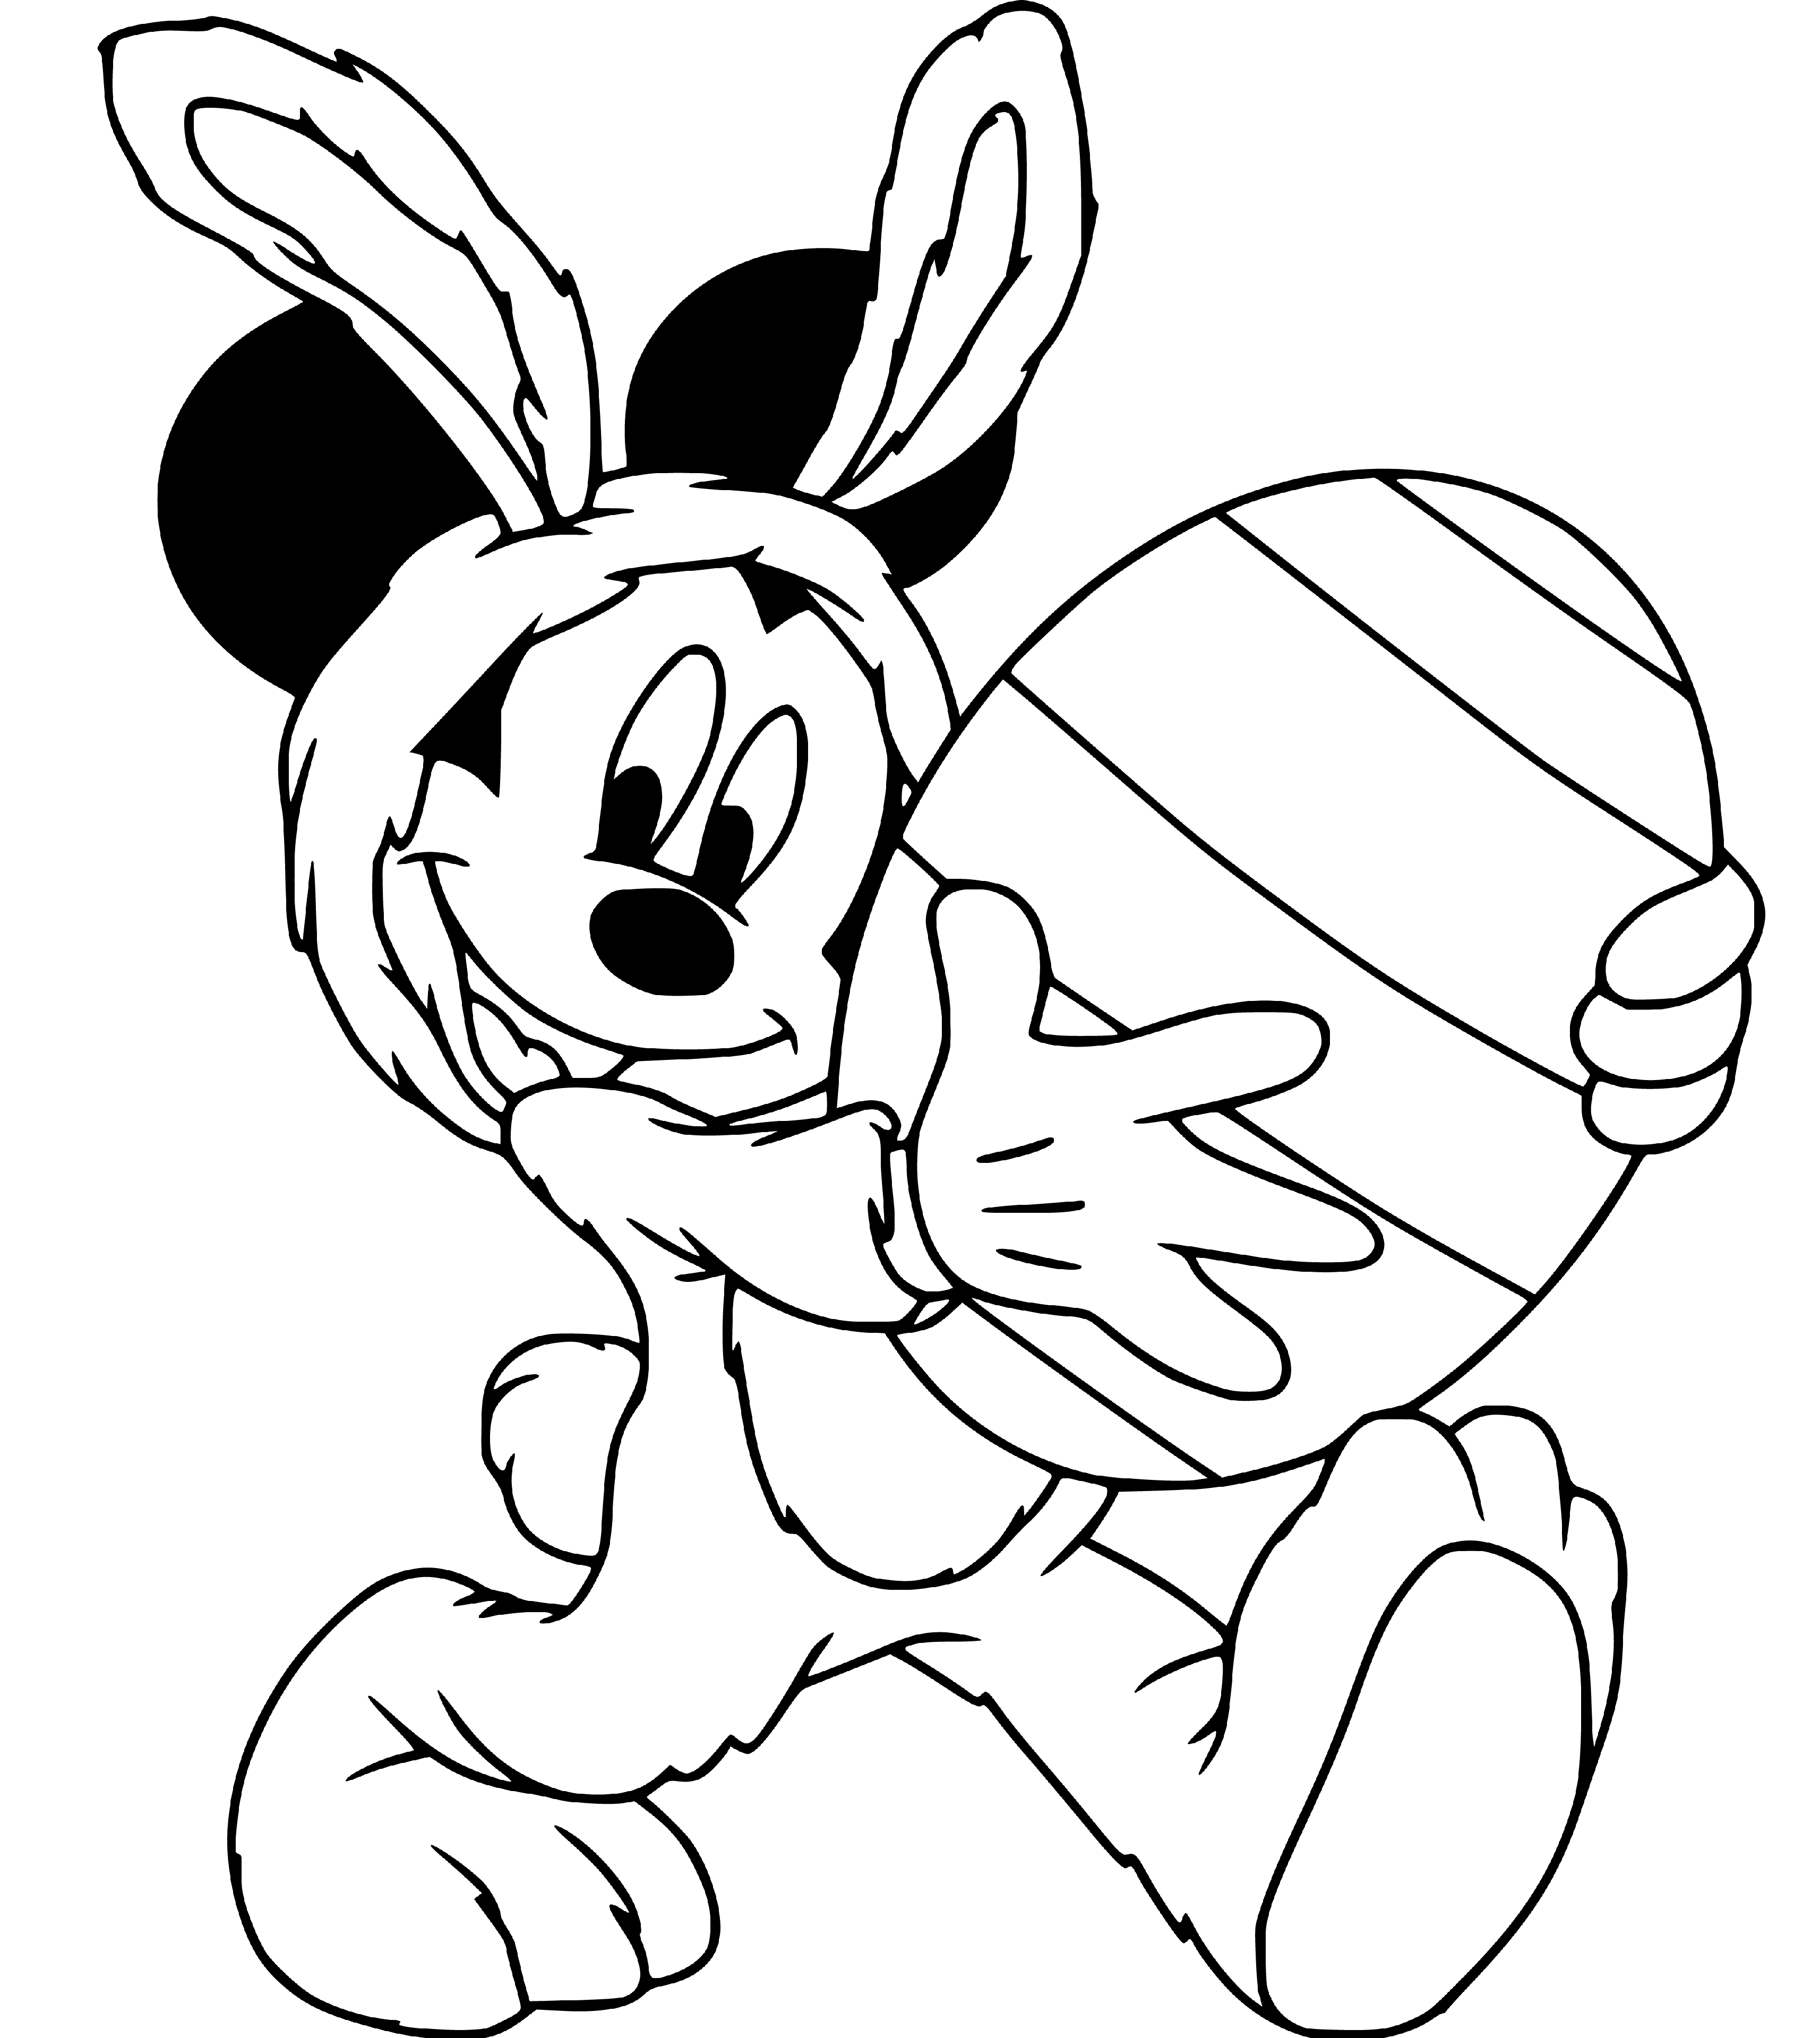 Mickey Mouse Easter Egg Coloring Page Printable - SheetalColor.com